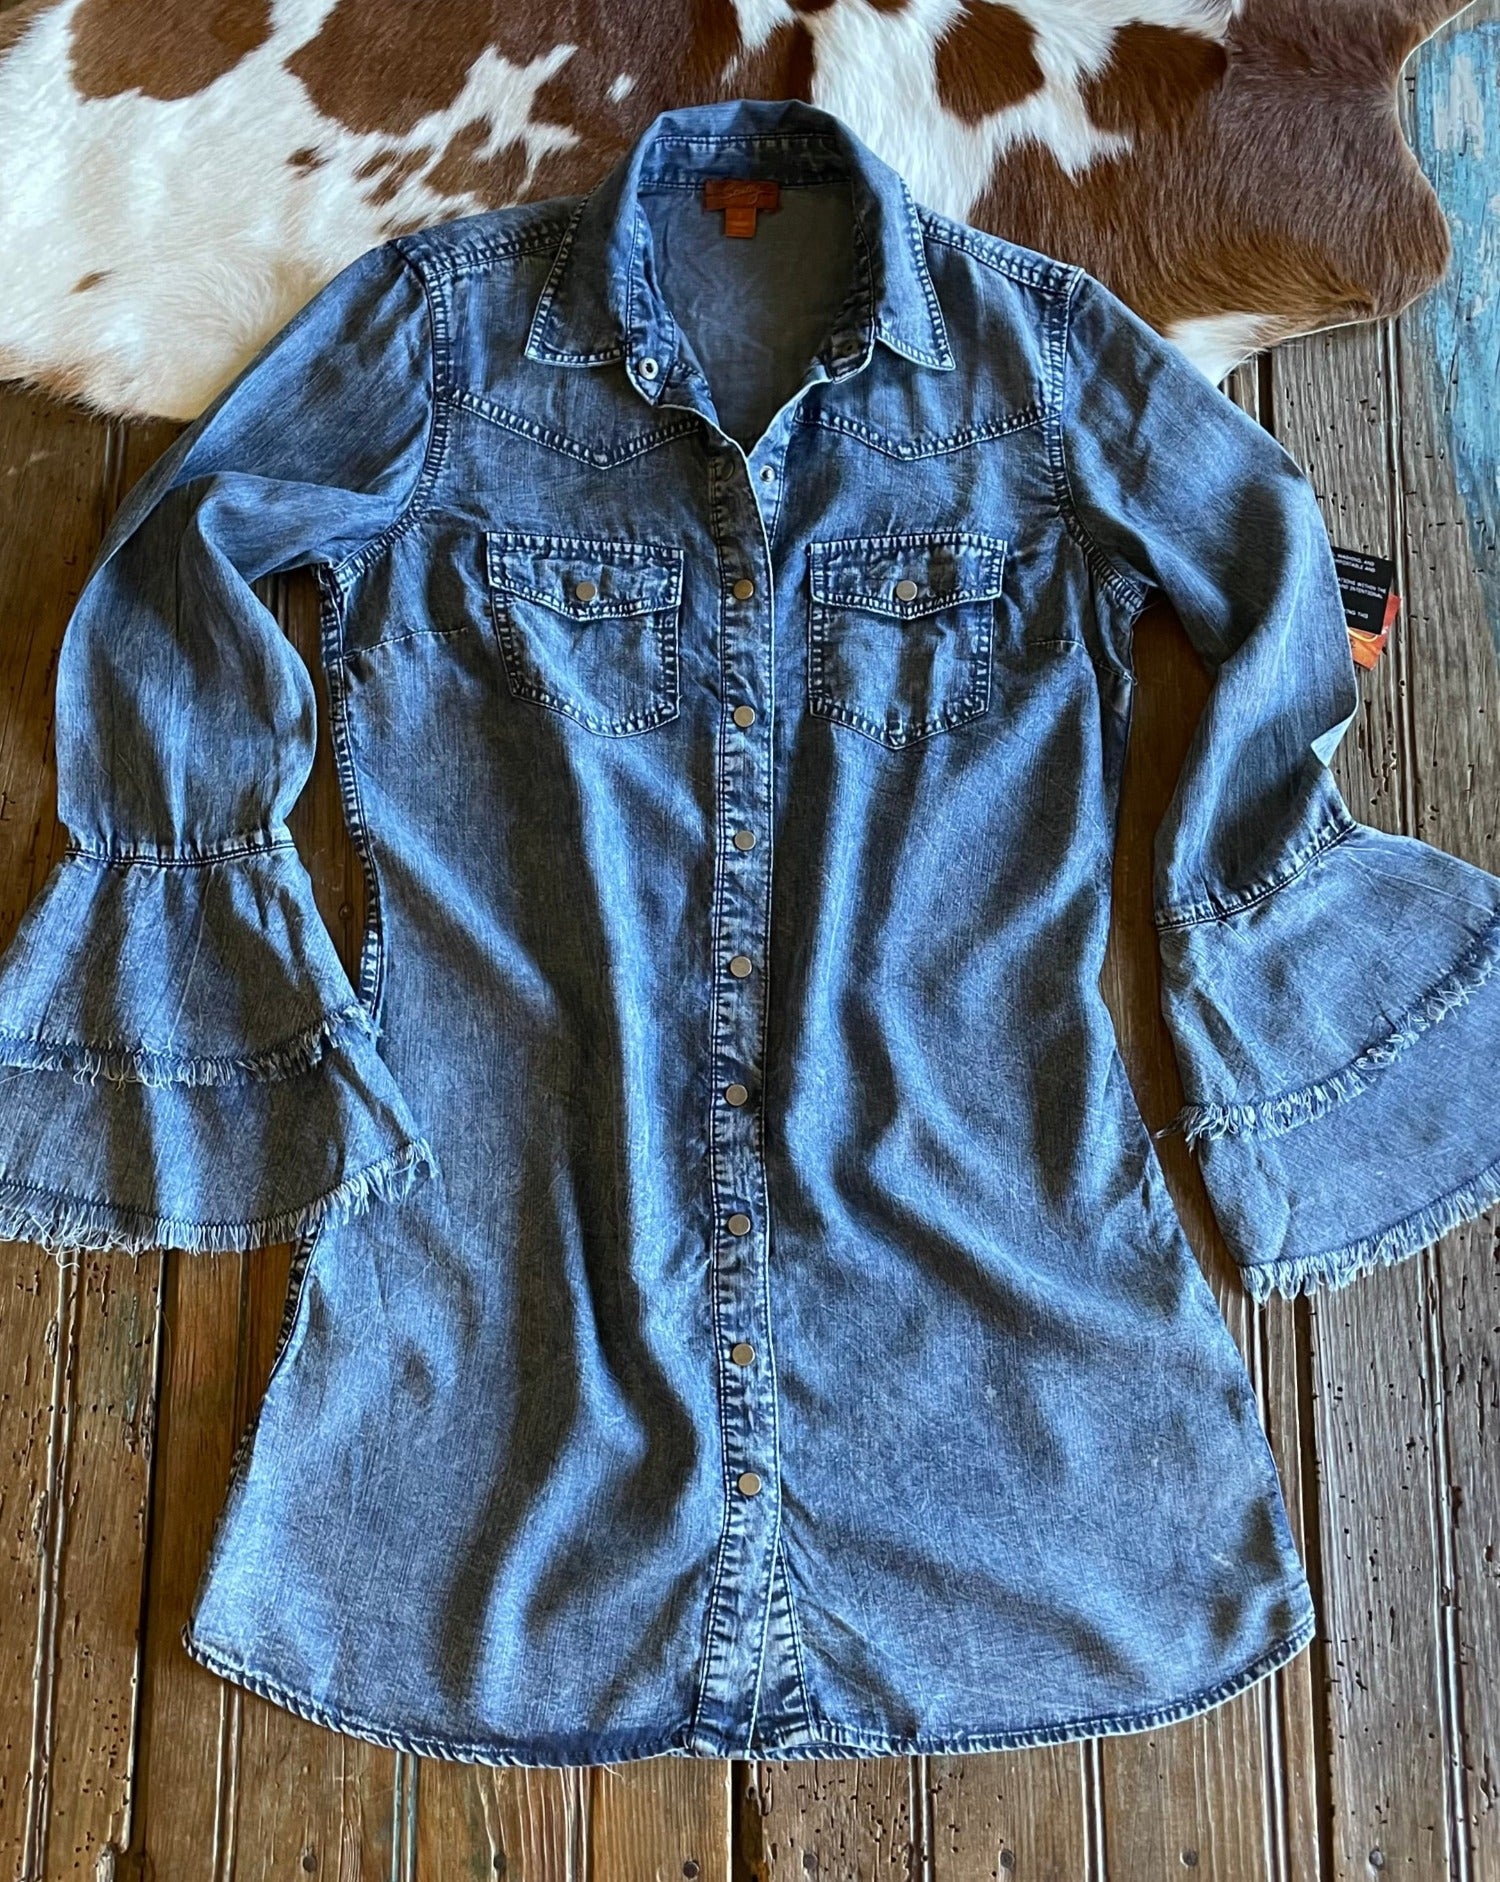 Alloy Spoon Jeans Addy Denim Shirt Dress, $49, Alloy Apparel